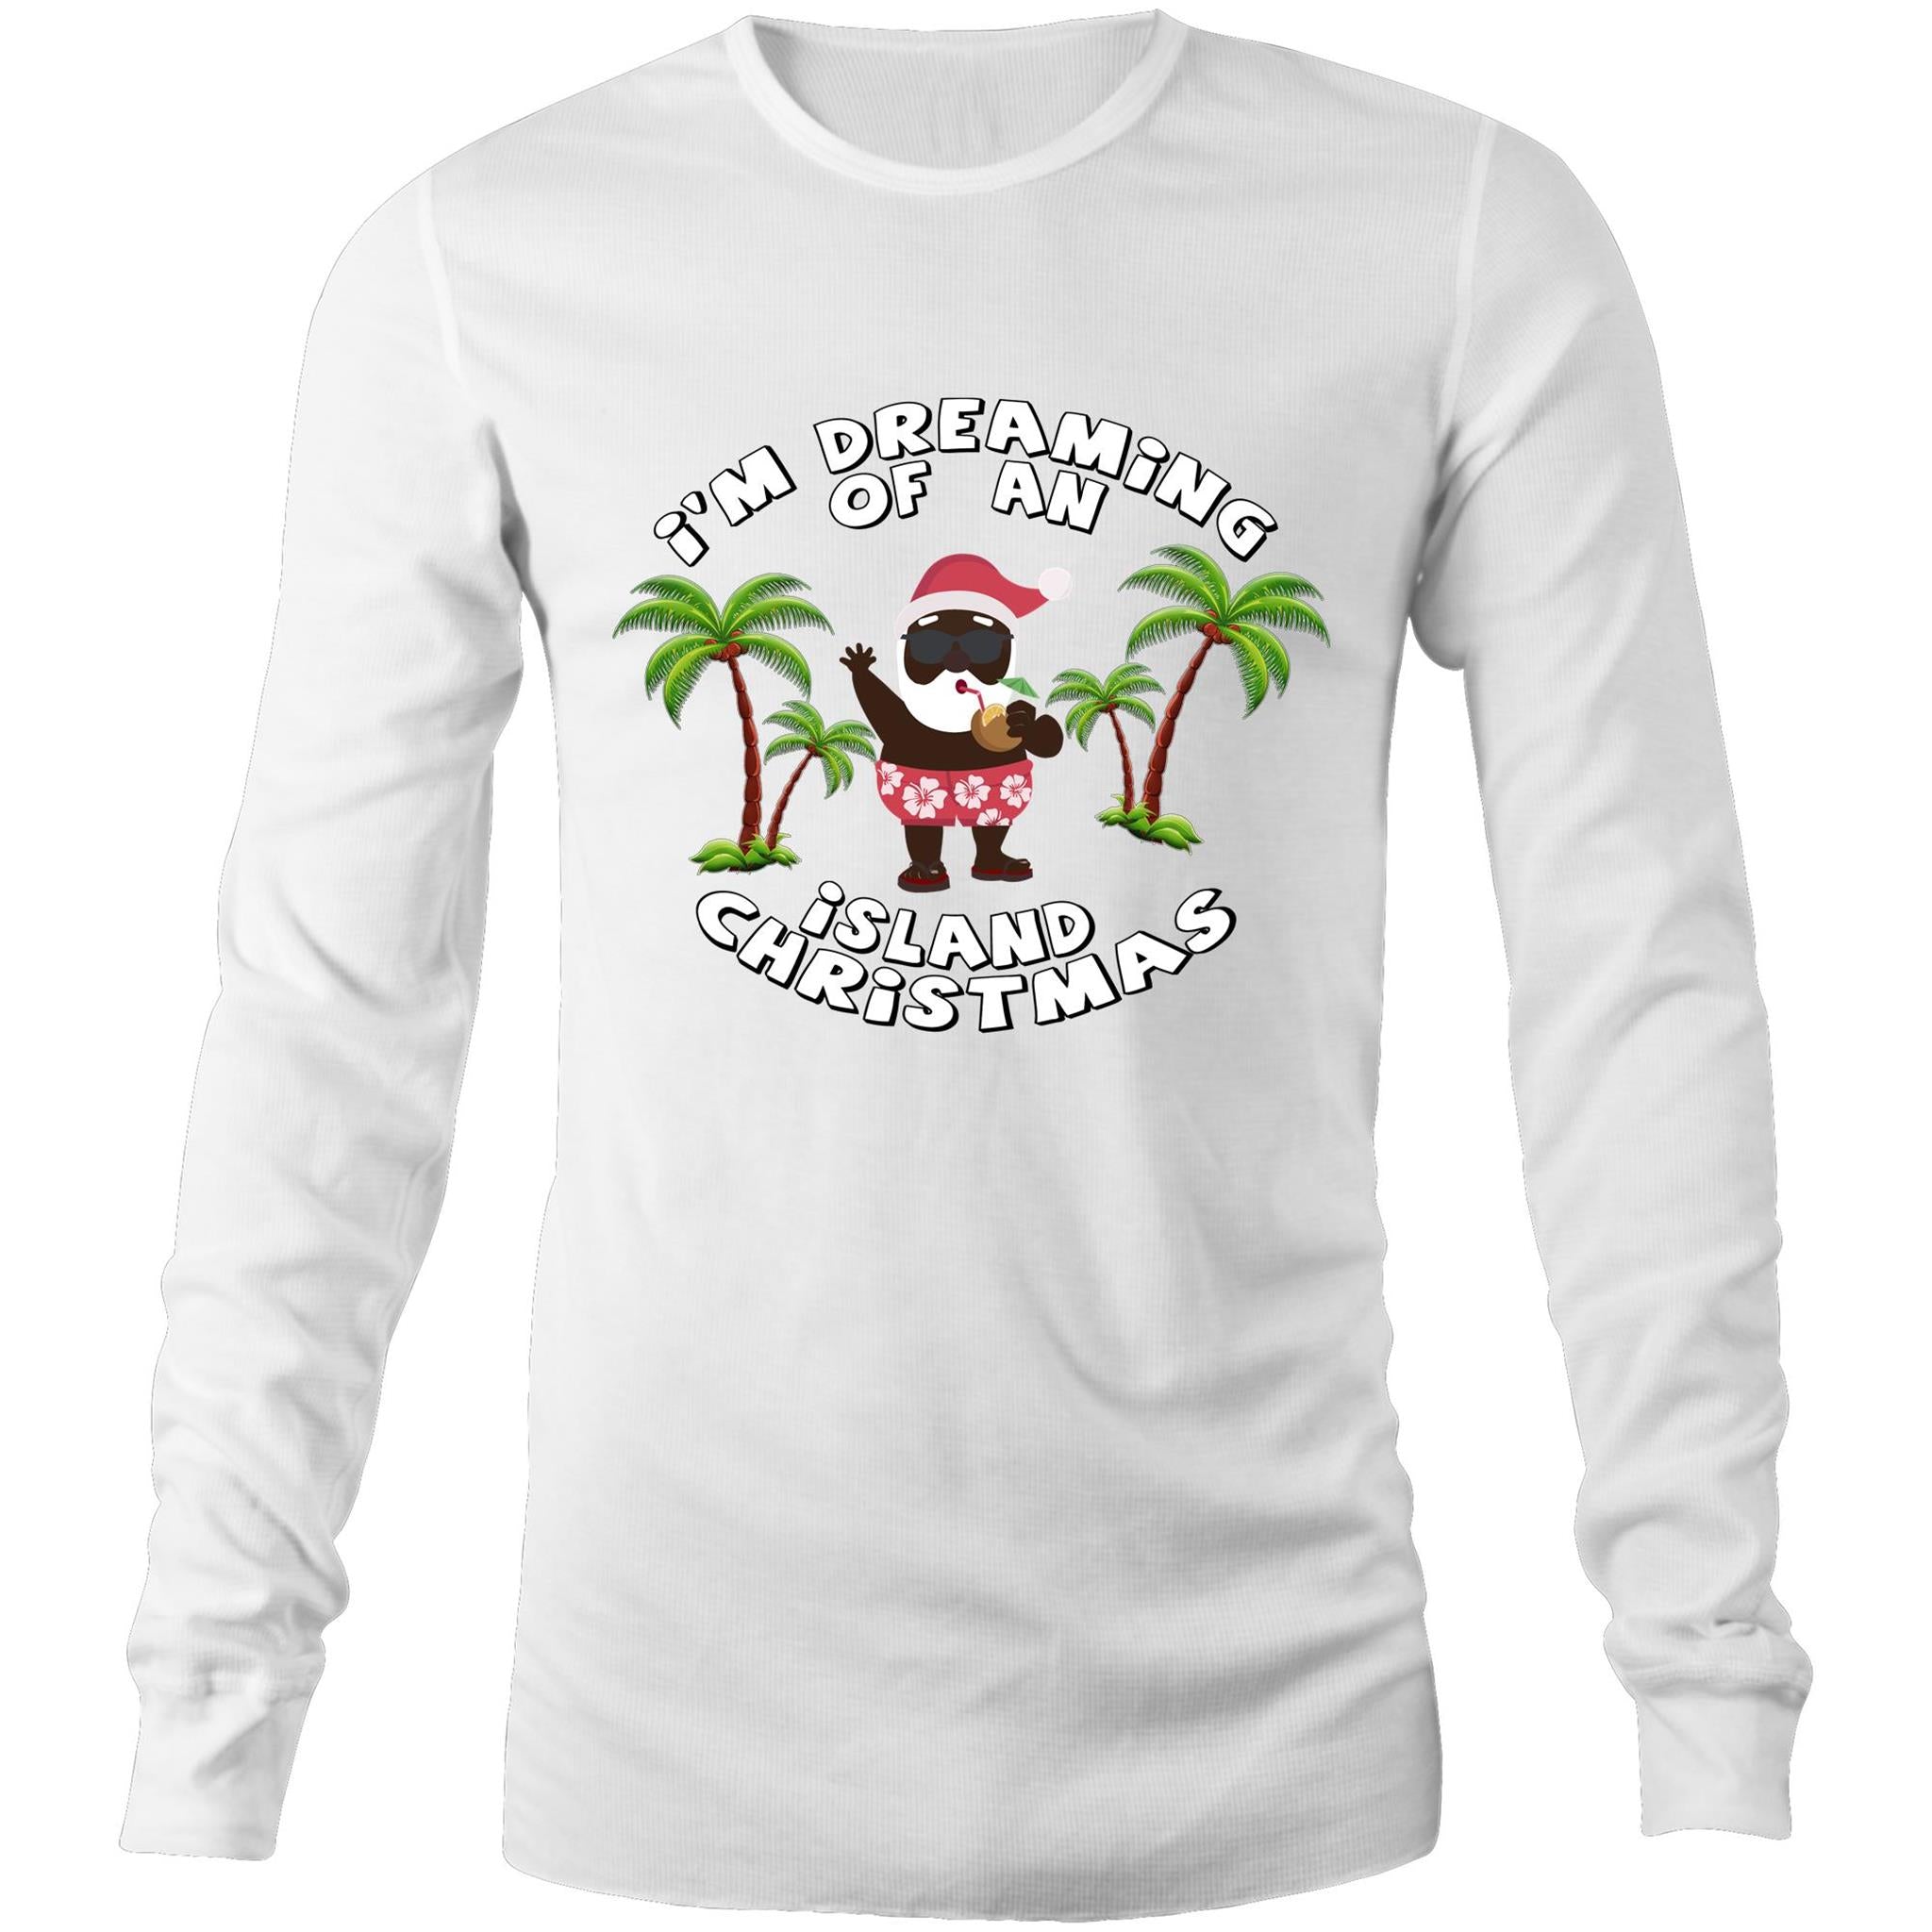 'Island Christmas' Long Sleeve T-Shirt